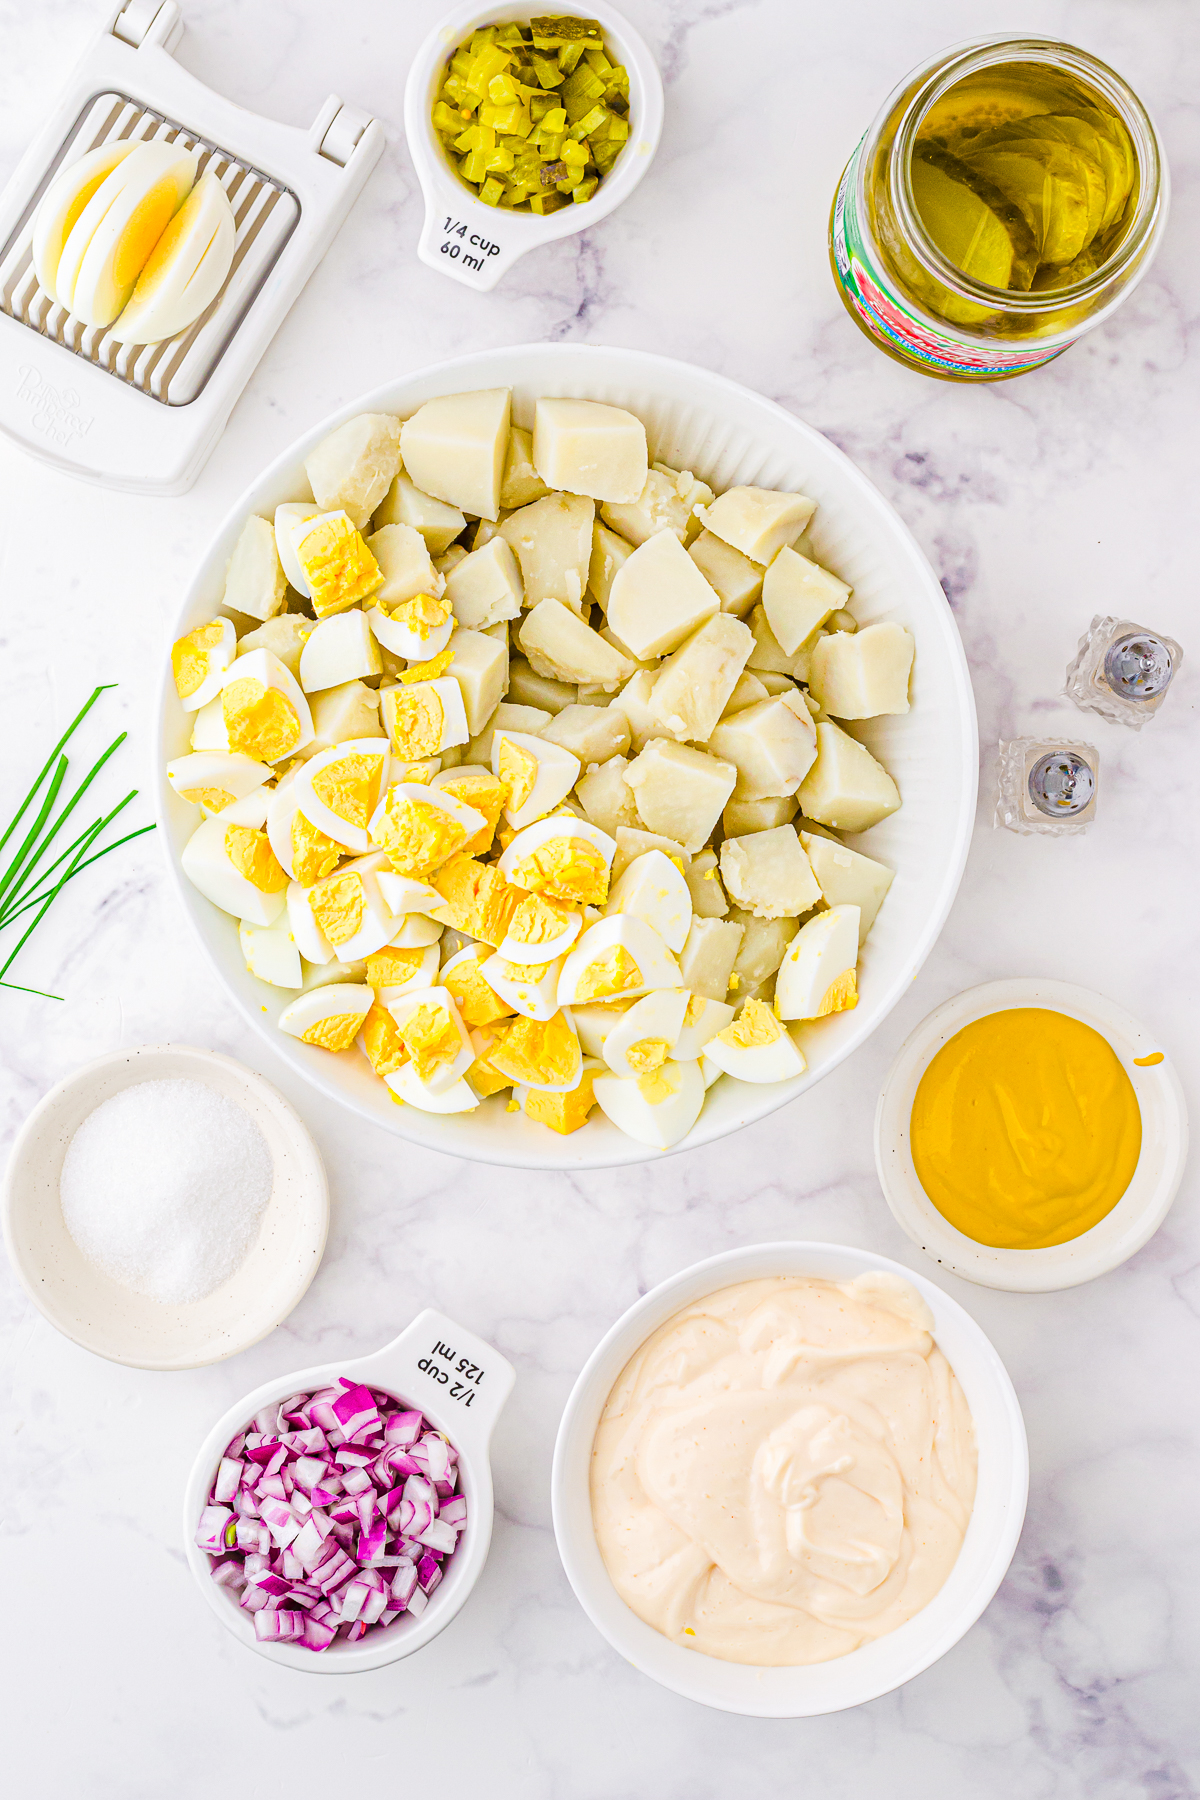 Ingredients needed to make Classic Potato Salad